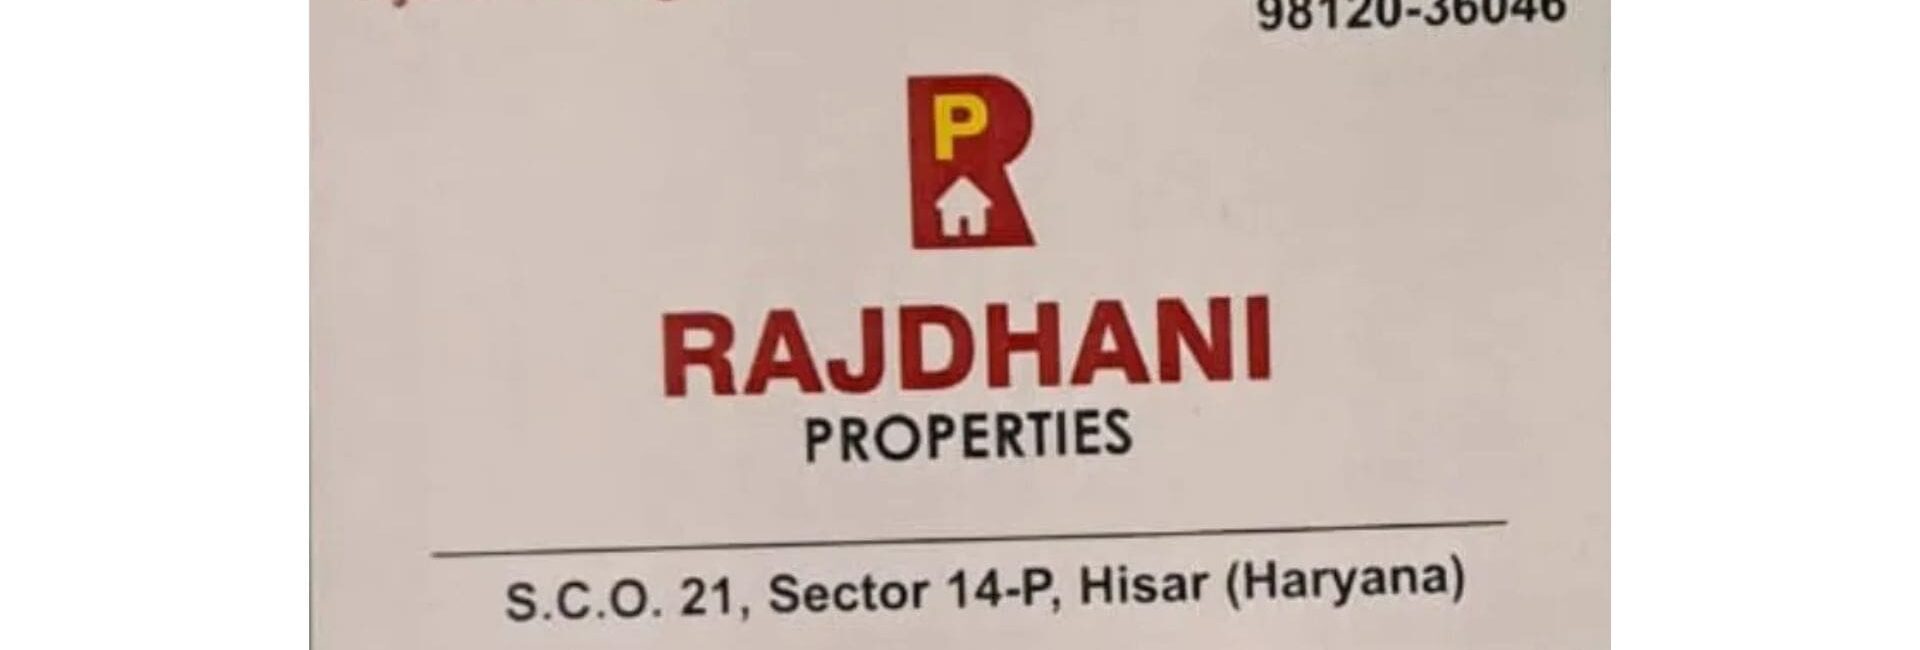 Rajdhani Properties - Property Dealer in Hisar sector 14